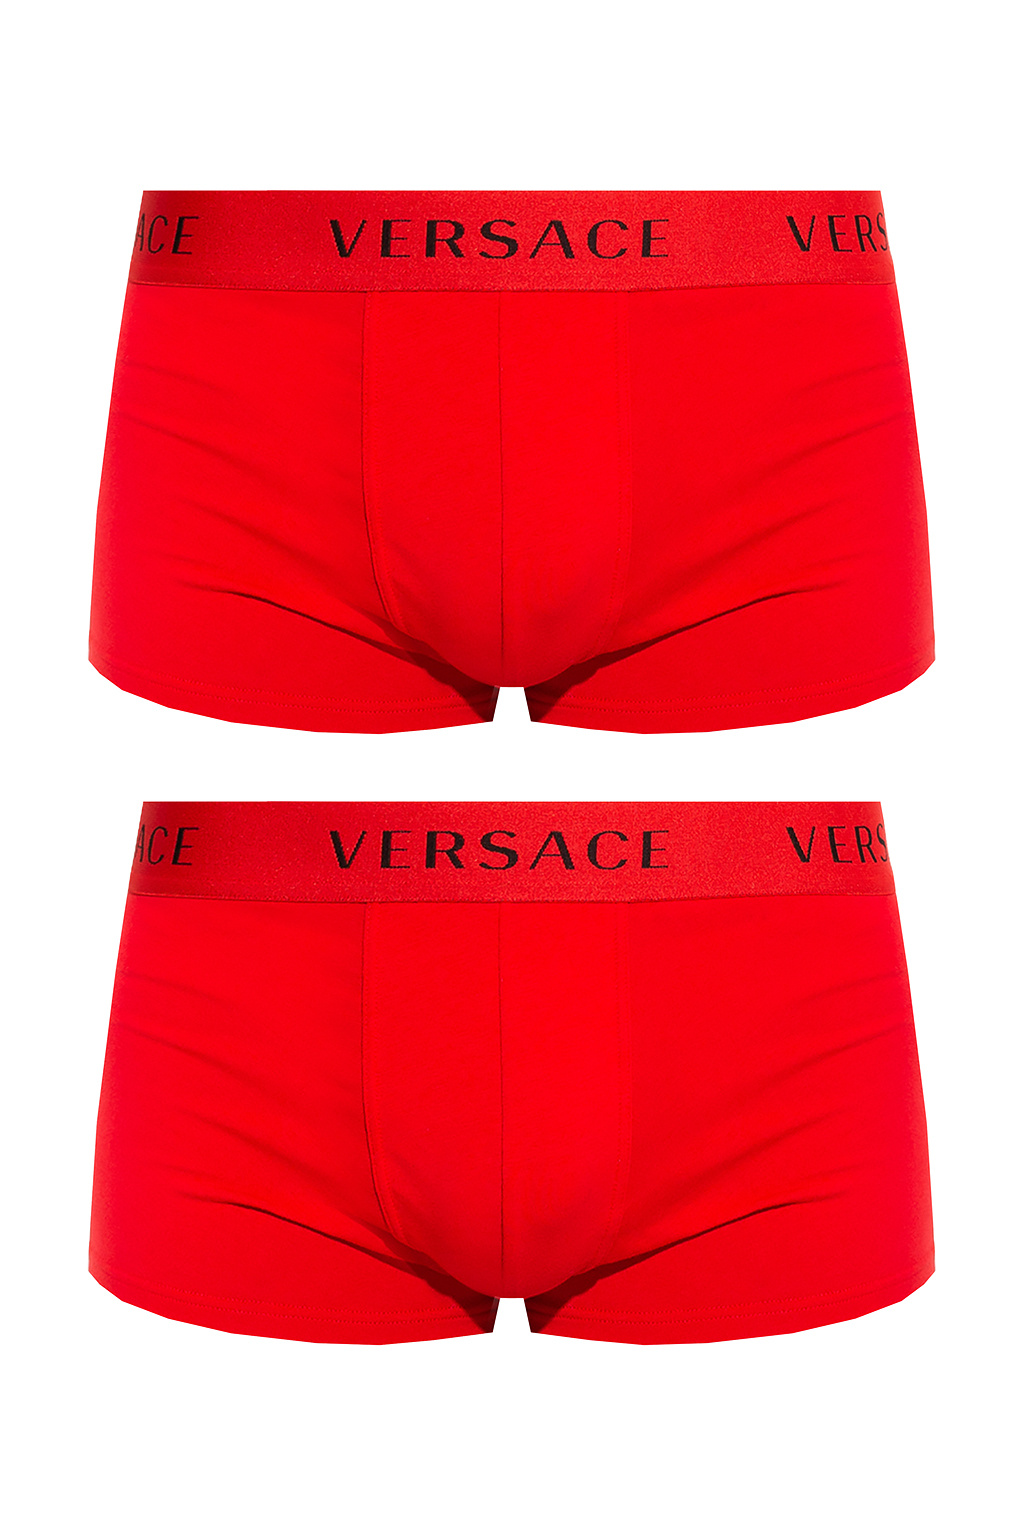 versace boxers 2 pack